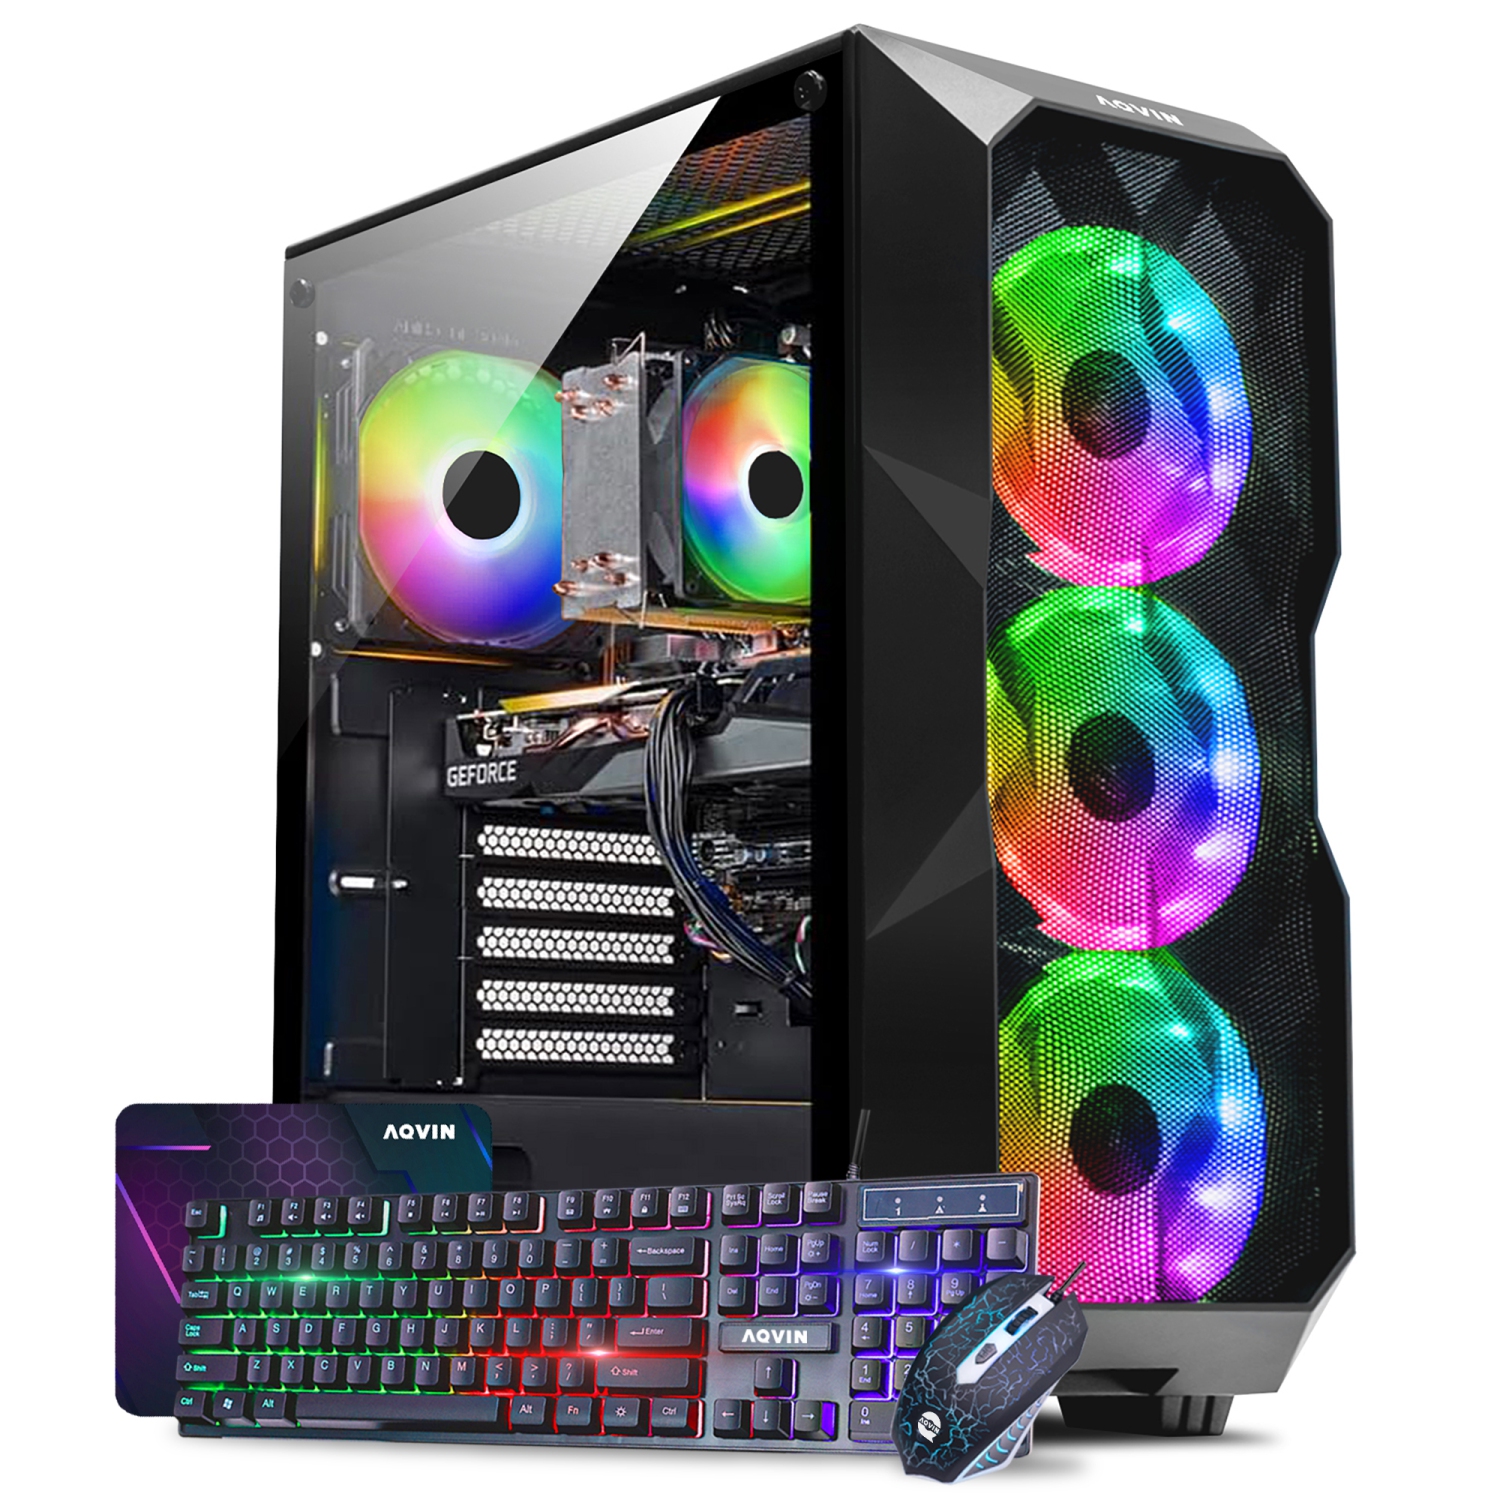 Gaming PC AQVIN AQB70 Desktop Computer Tower| RGB Fan Lights| Intel Core i7 CPU upto 4.00 GHz| 32GB RAM| 2TB SSD| GeForce GTX 1630 GPU| Windows 10 Pro| WIFI Ready - 1 year Warranty